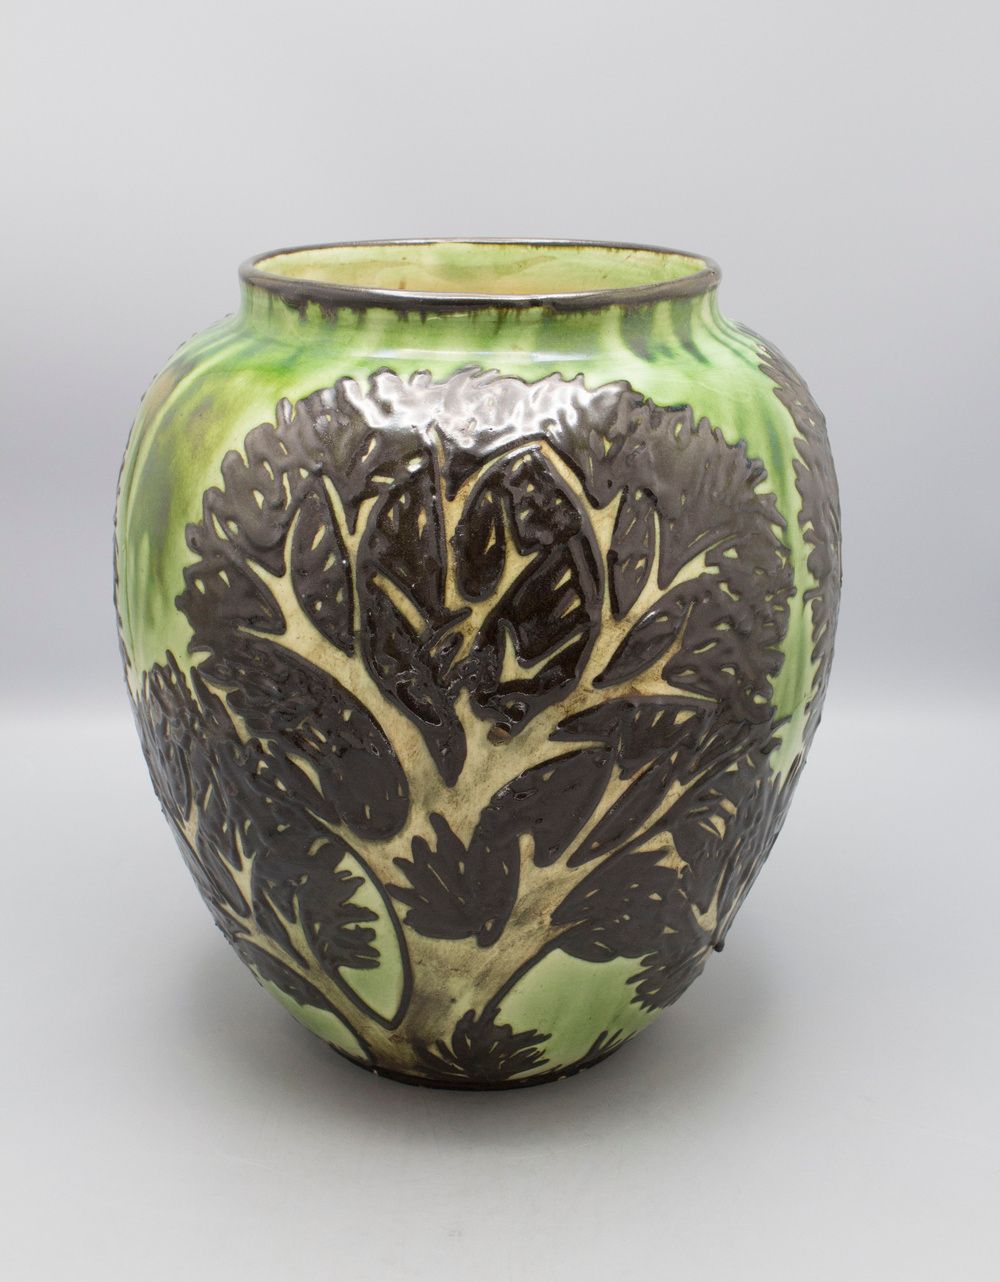 Jugendstil Majolika Vase 'Bäume' / An Art Nouveau majolica vase 'Trees', Max Lae&hellip;